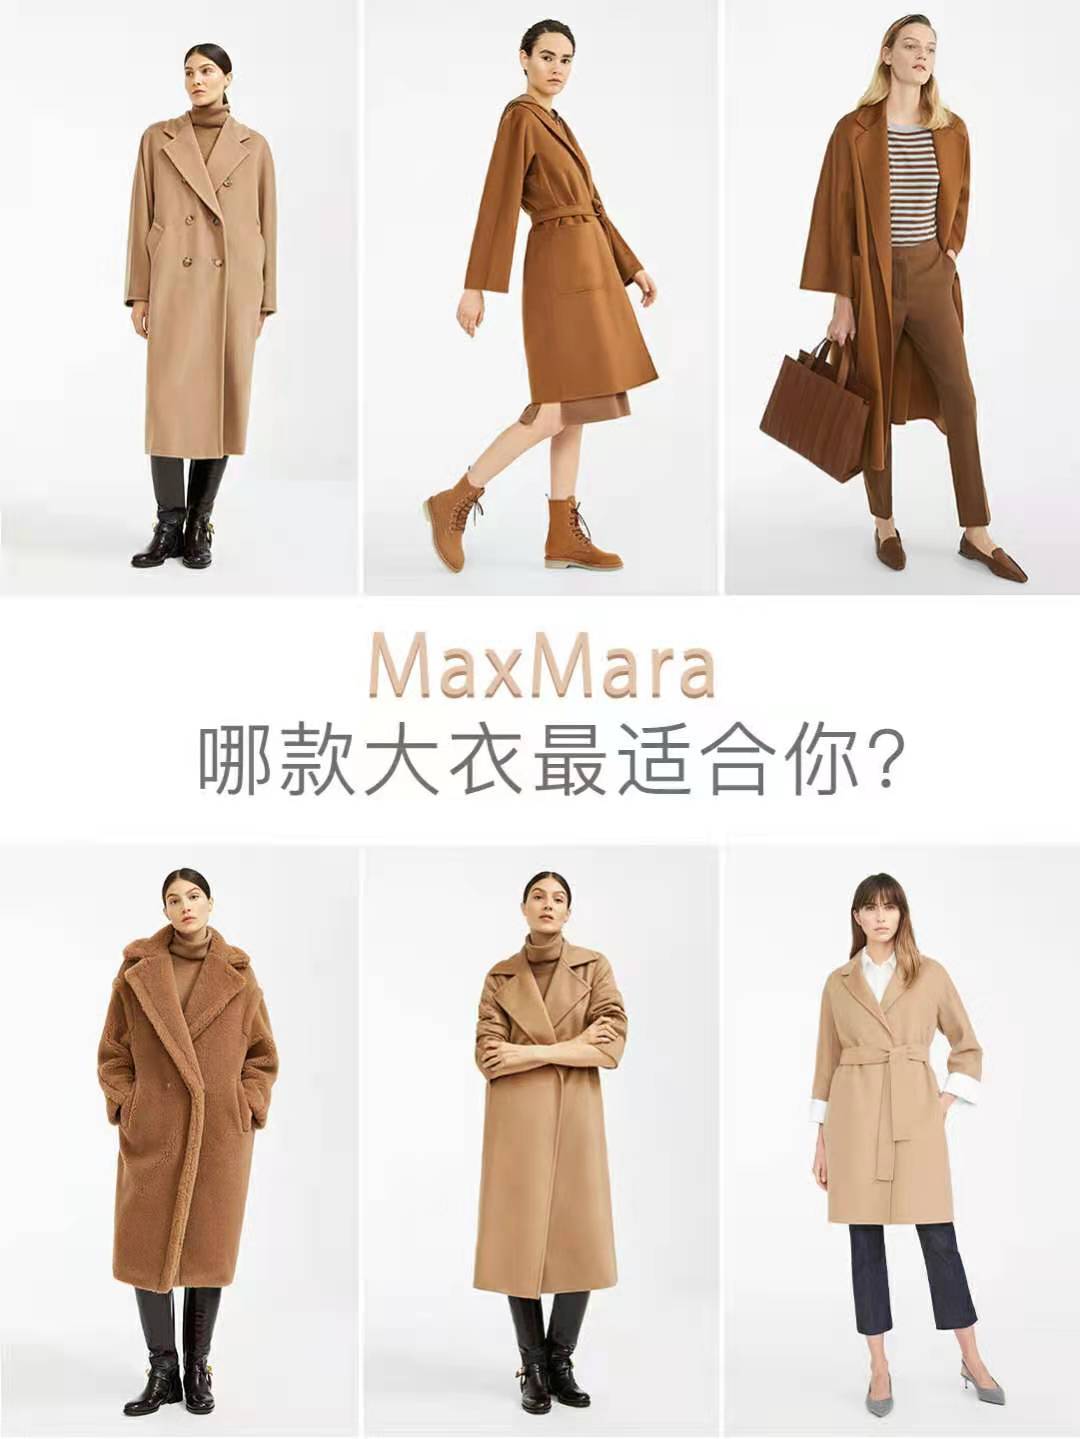 maramotti于1951年创立maxmara, 推出第一个时装系列:一件驼色大衣,一